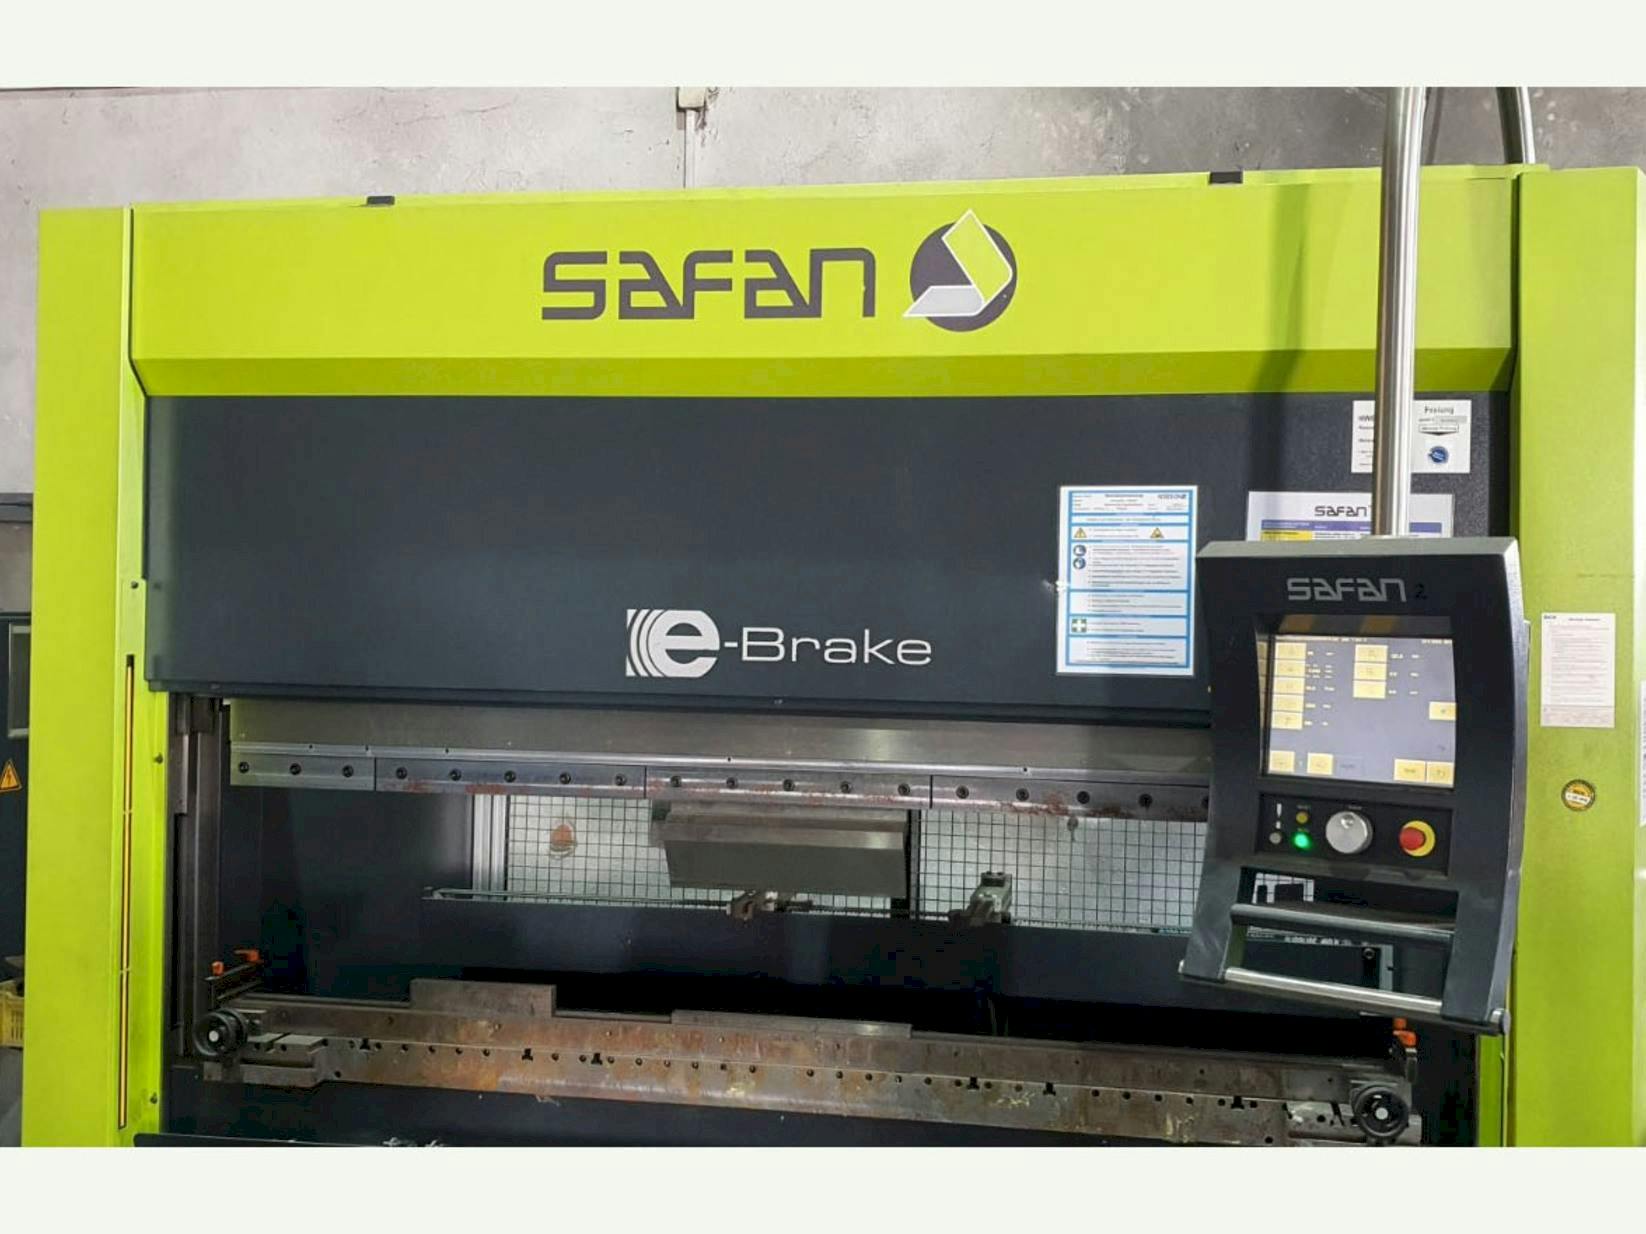 Prikaz  stroja Safan E-brake 50-2050 ts1  sprijeda